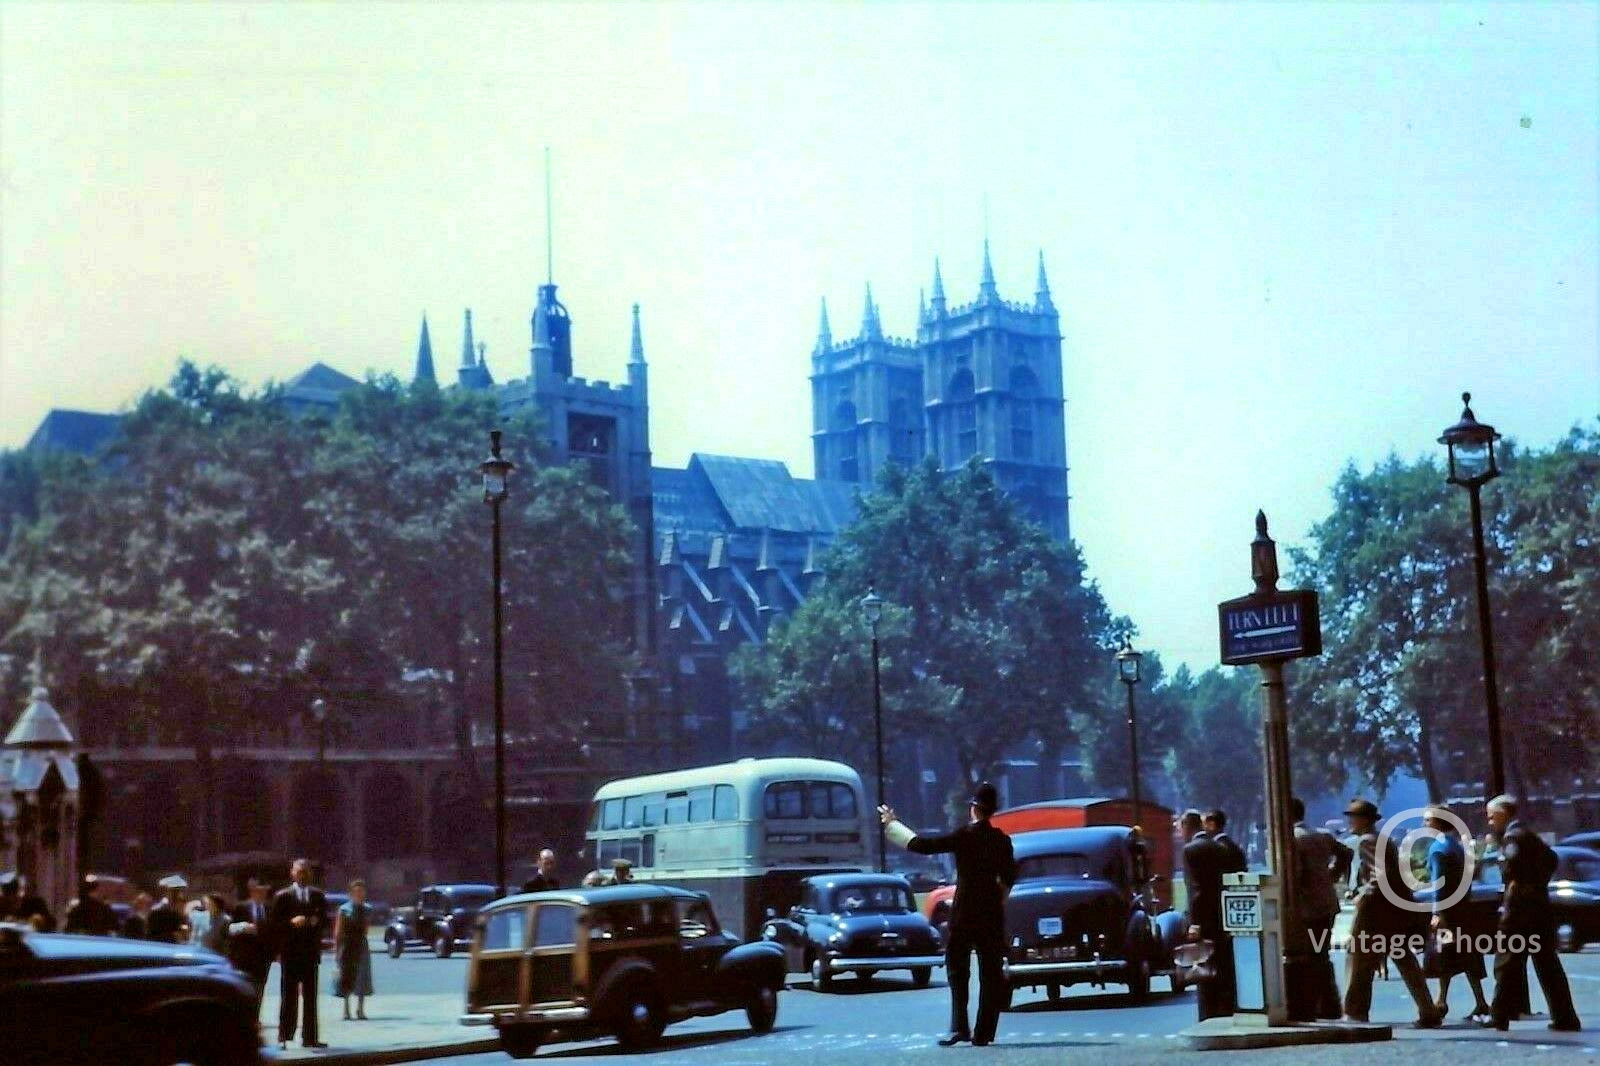 1950s Parliament Square - Policeman, cars, bus